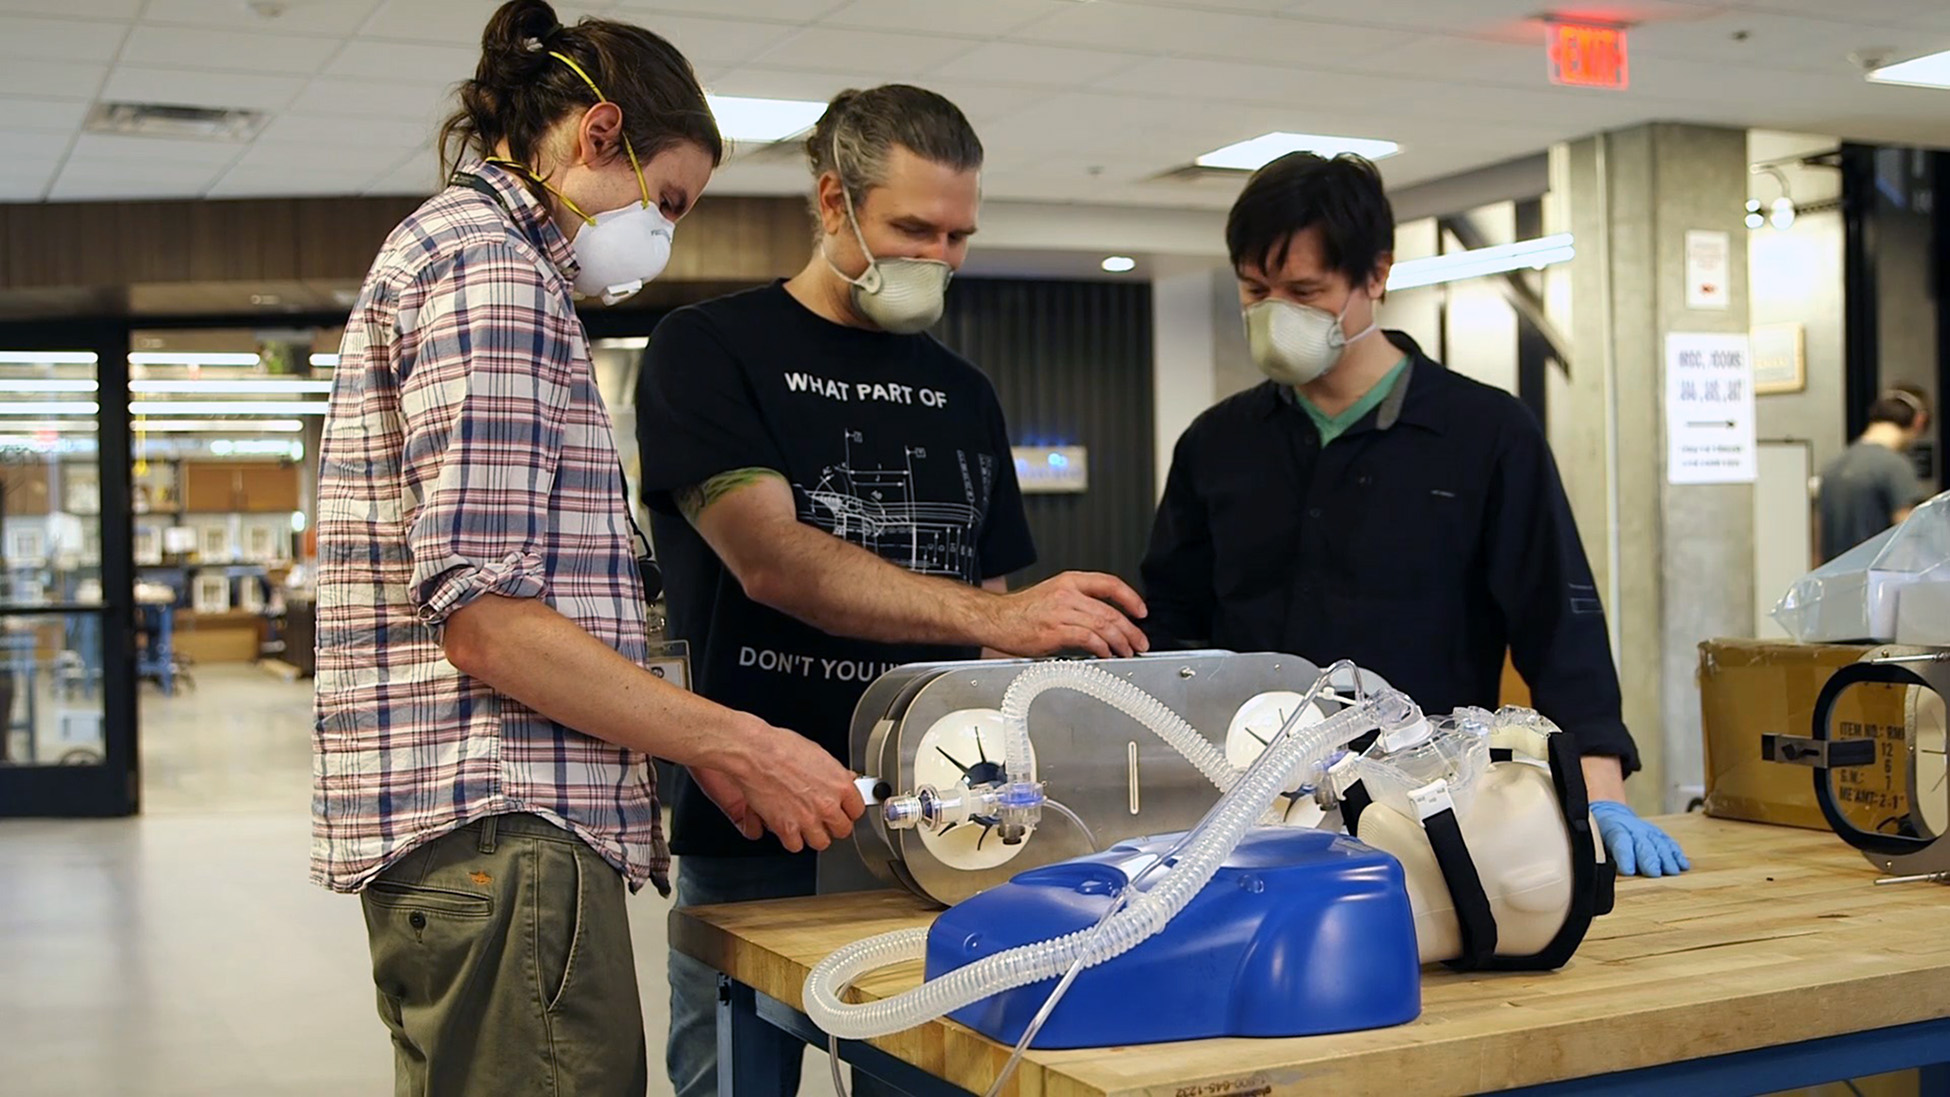 Bag-Valve-Mask (BVM) resuscitators